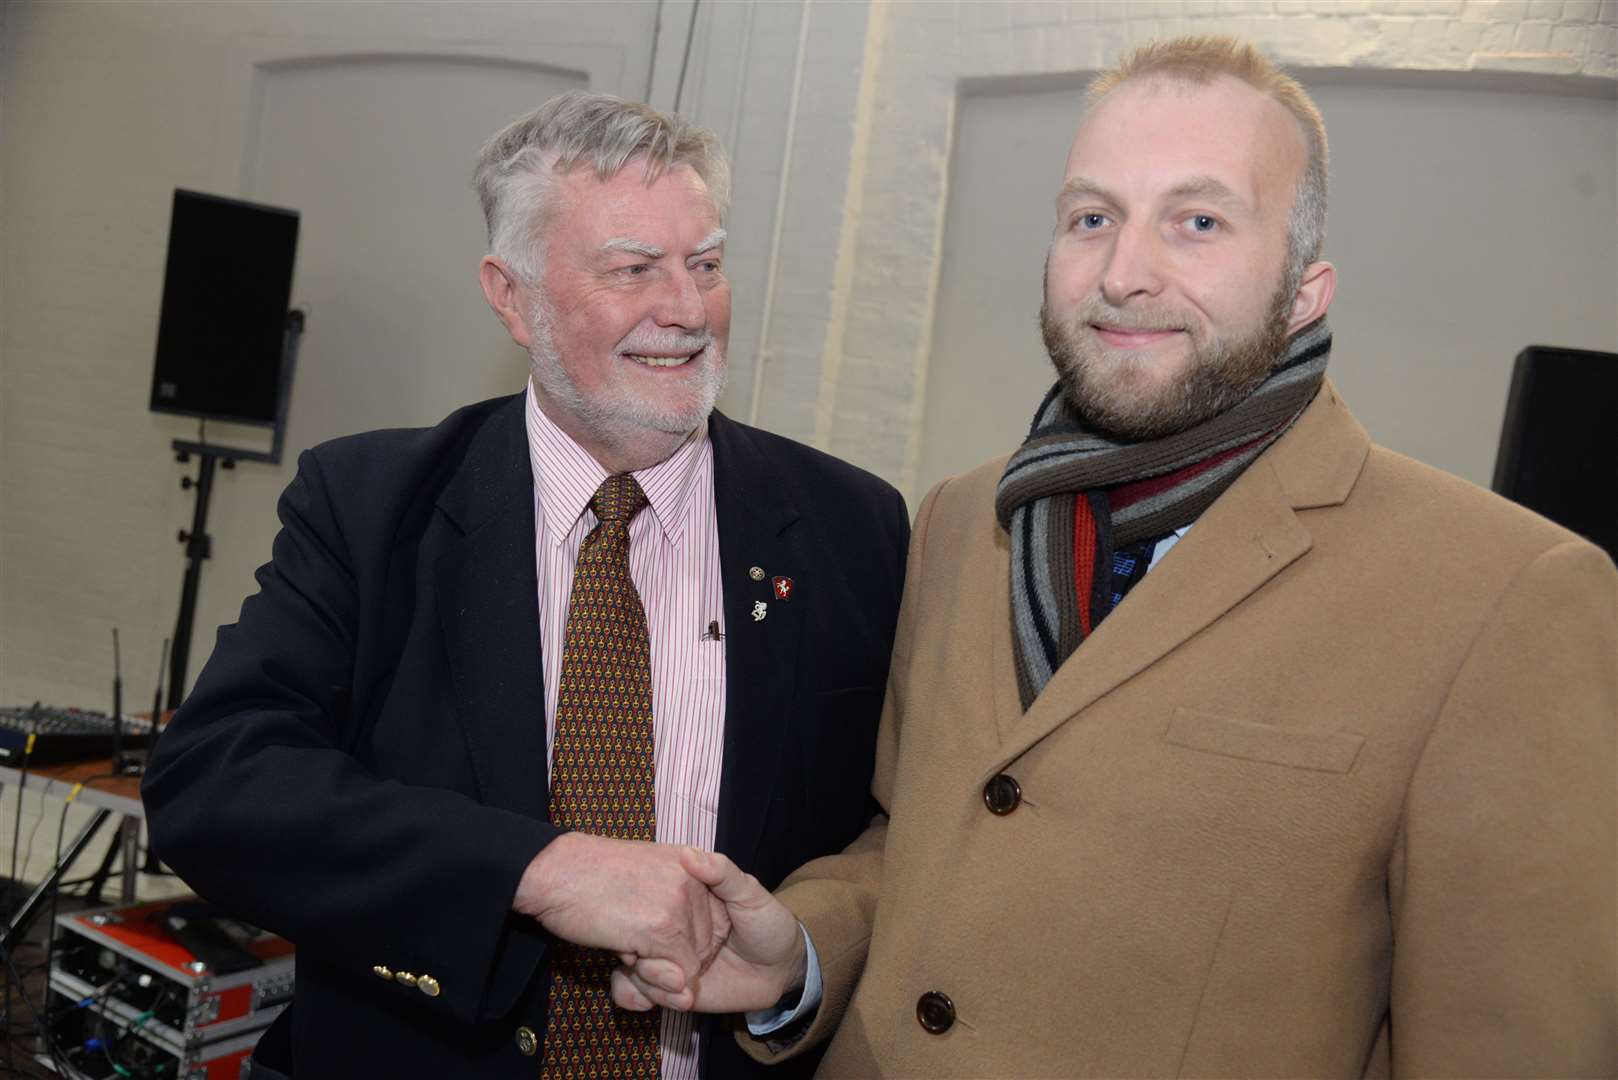 New council leader Robert Thomas, right, with his dad Cllr Ian Thomas